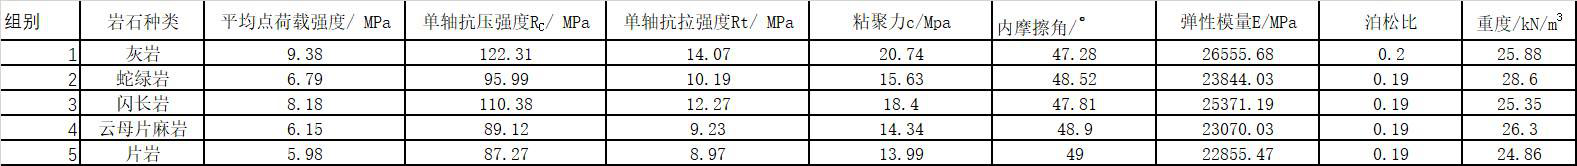 Load test data of Jinsha River in 2020